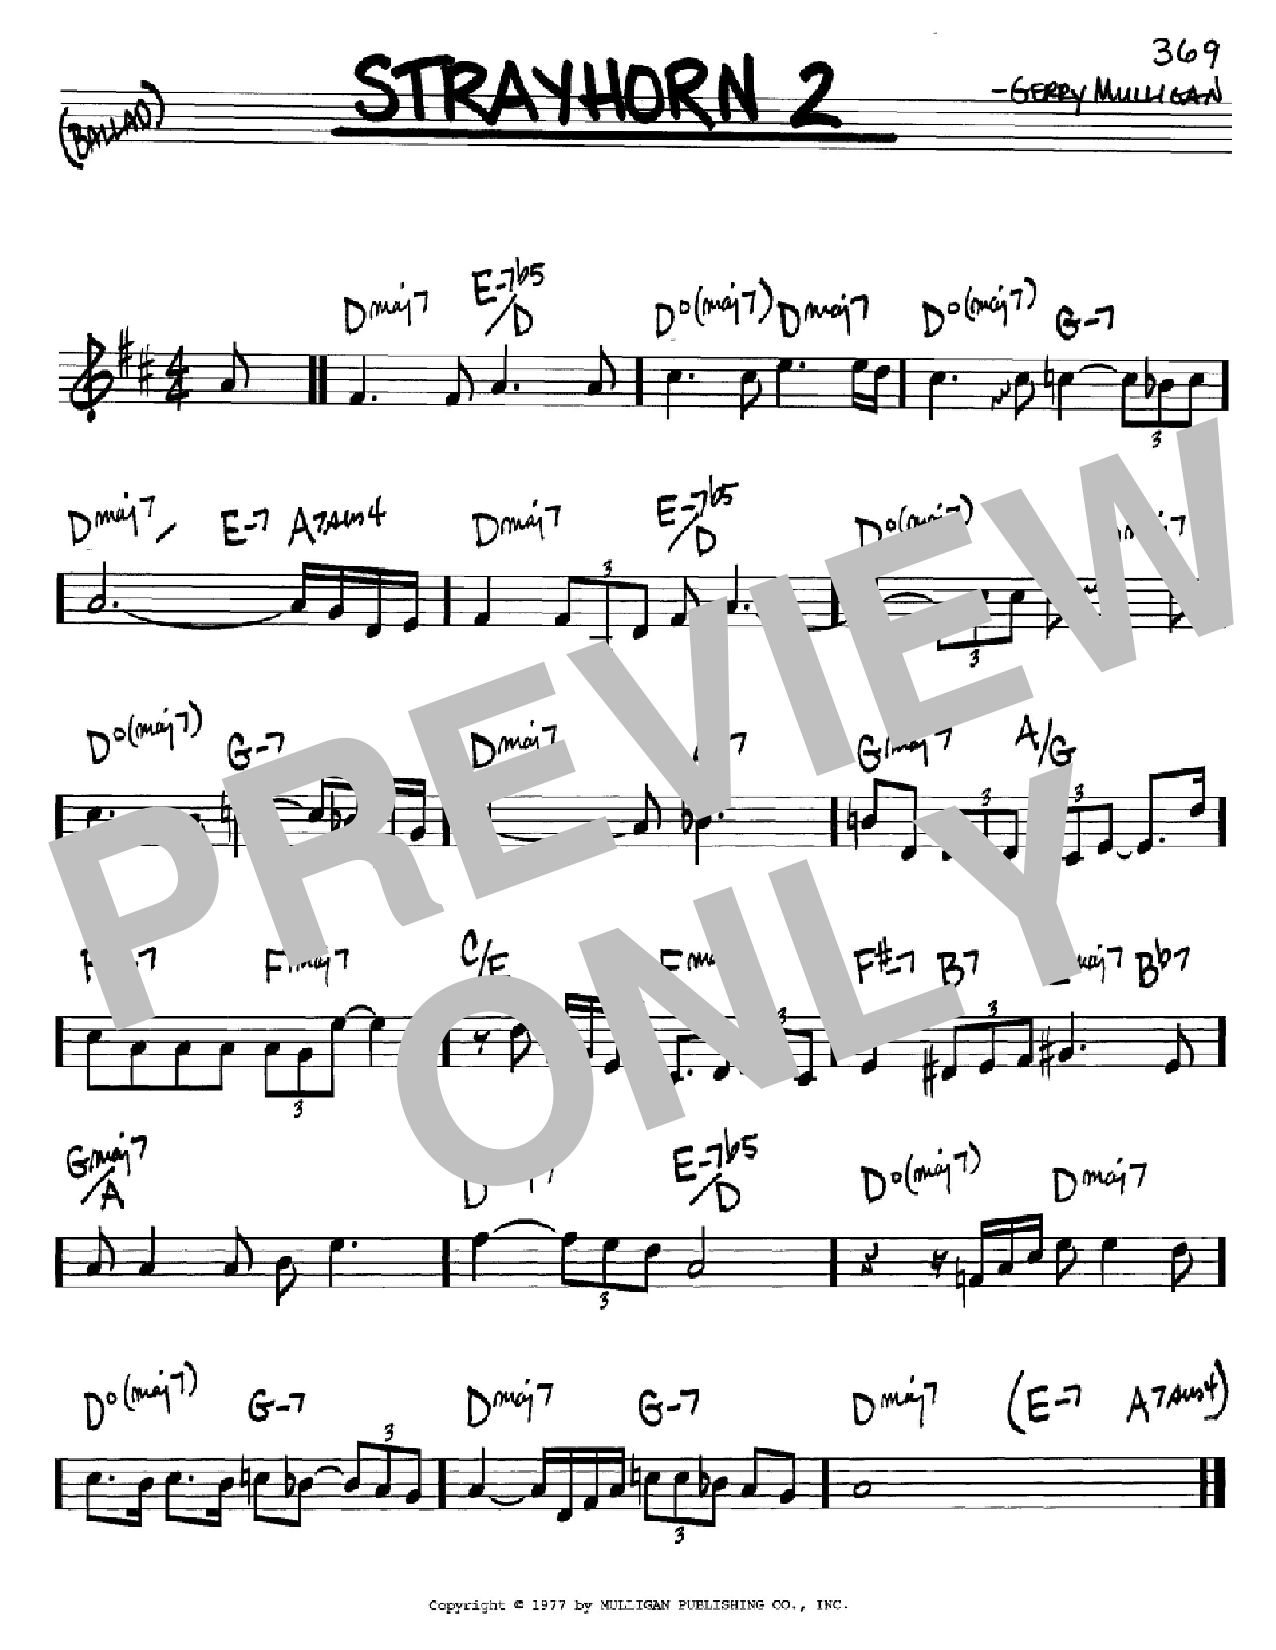 Download Gerry Mulligan Strayhorn 2 Sheet Music